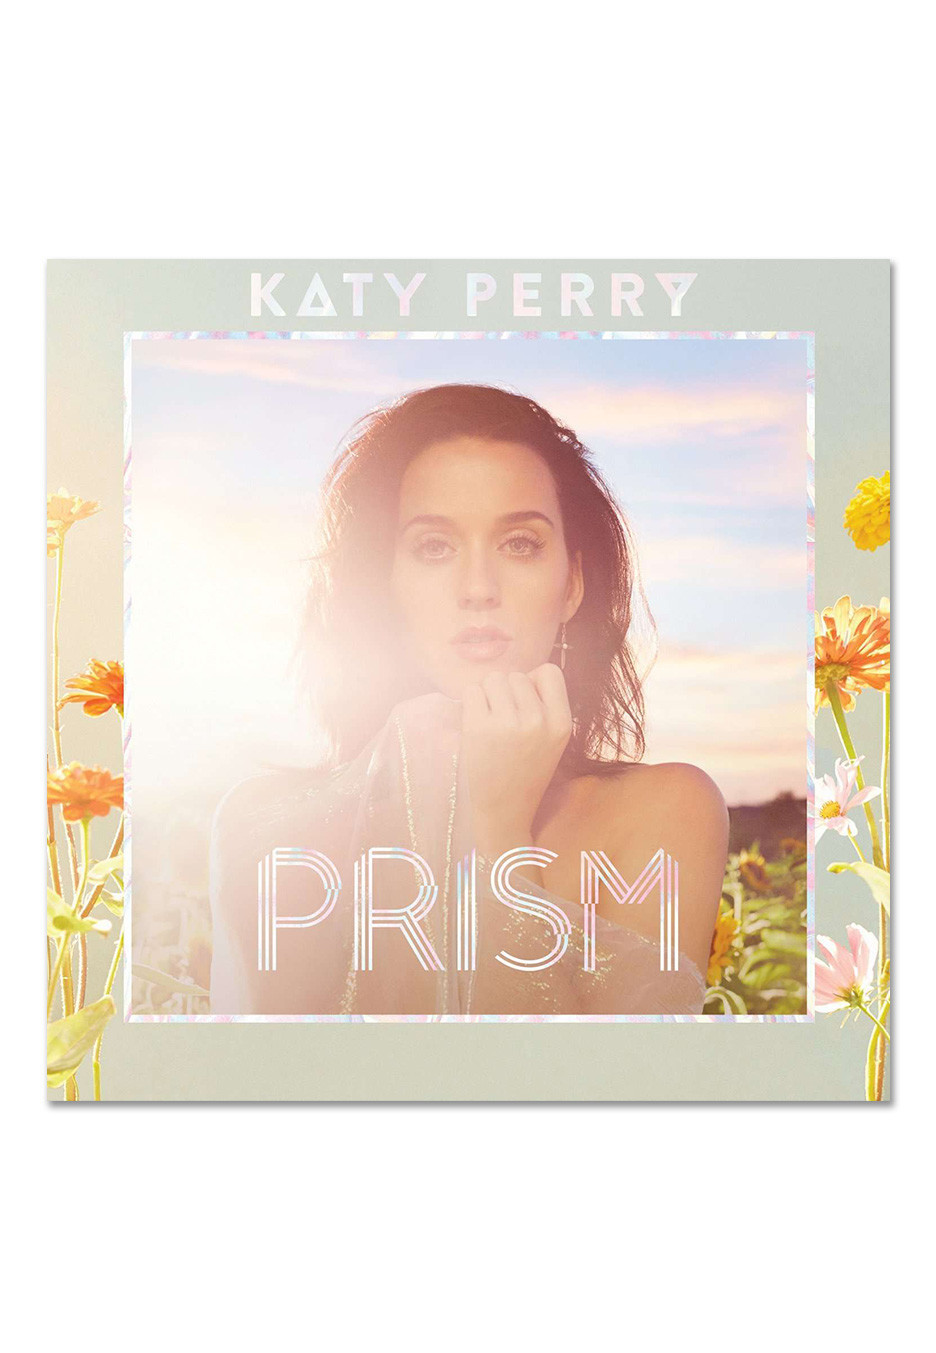 Katy Perry - Prism (10th Anniversary) - Vinyl